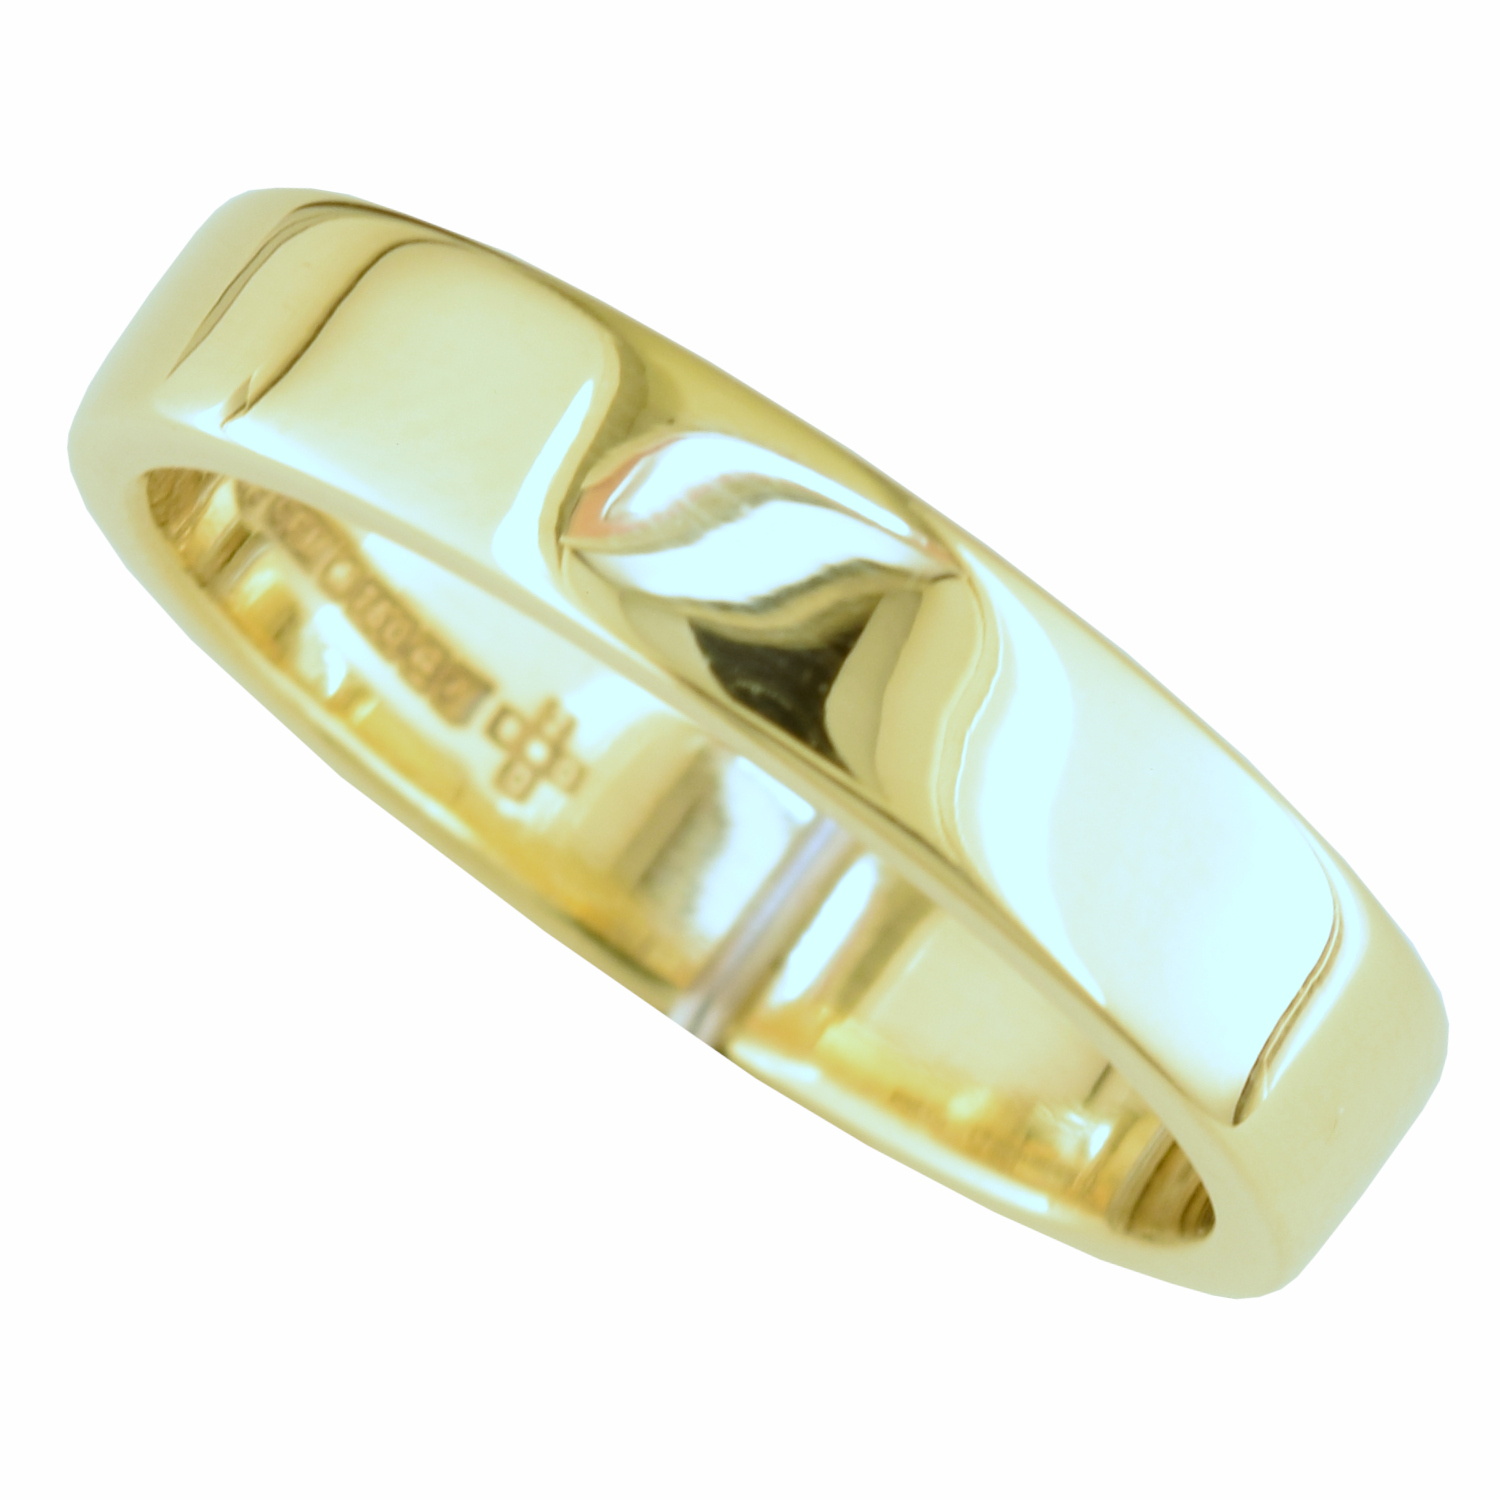 Unisex 22 Carat Wedding Rings at Rs 4290 in Ludhiana | ID: 21925609873